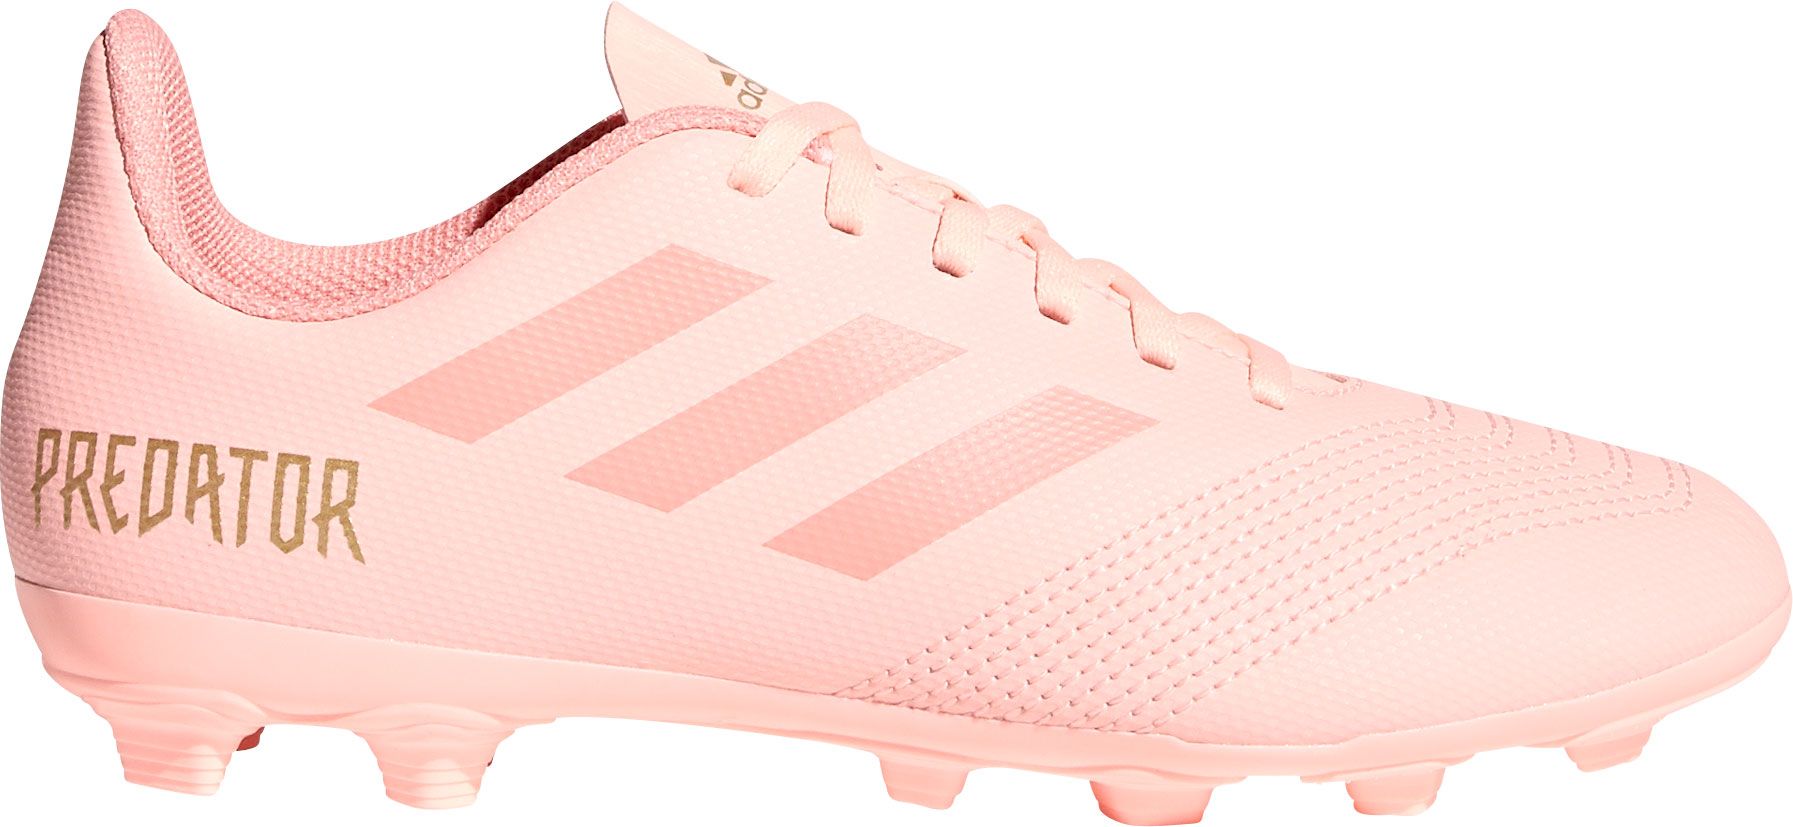 adidas predator soccer cleats pink